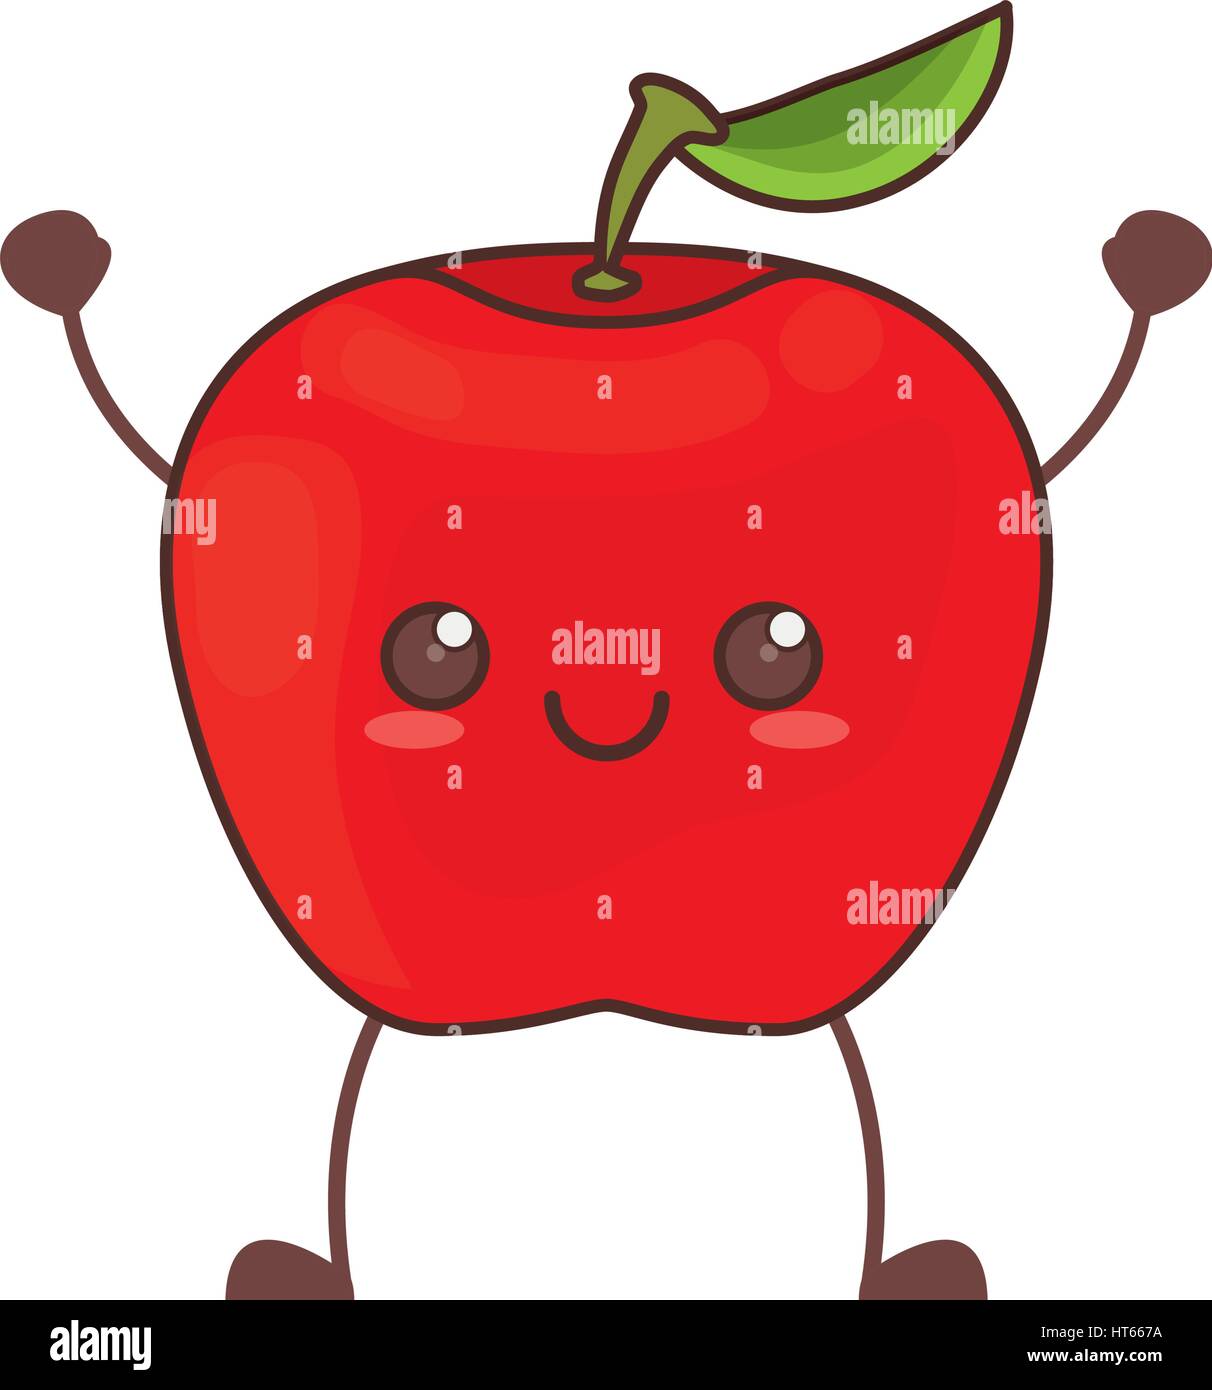 kawaii apple fruit image Stock Vector Image & Art - Alamy